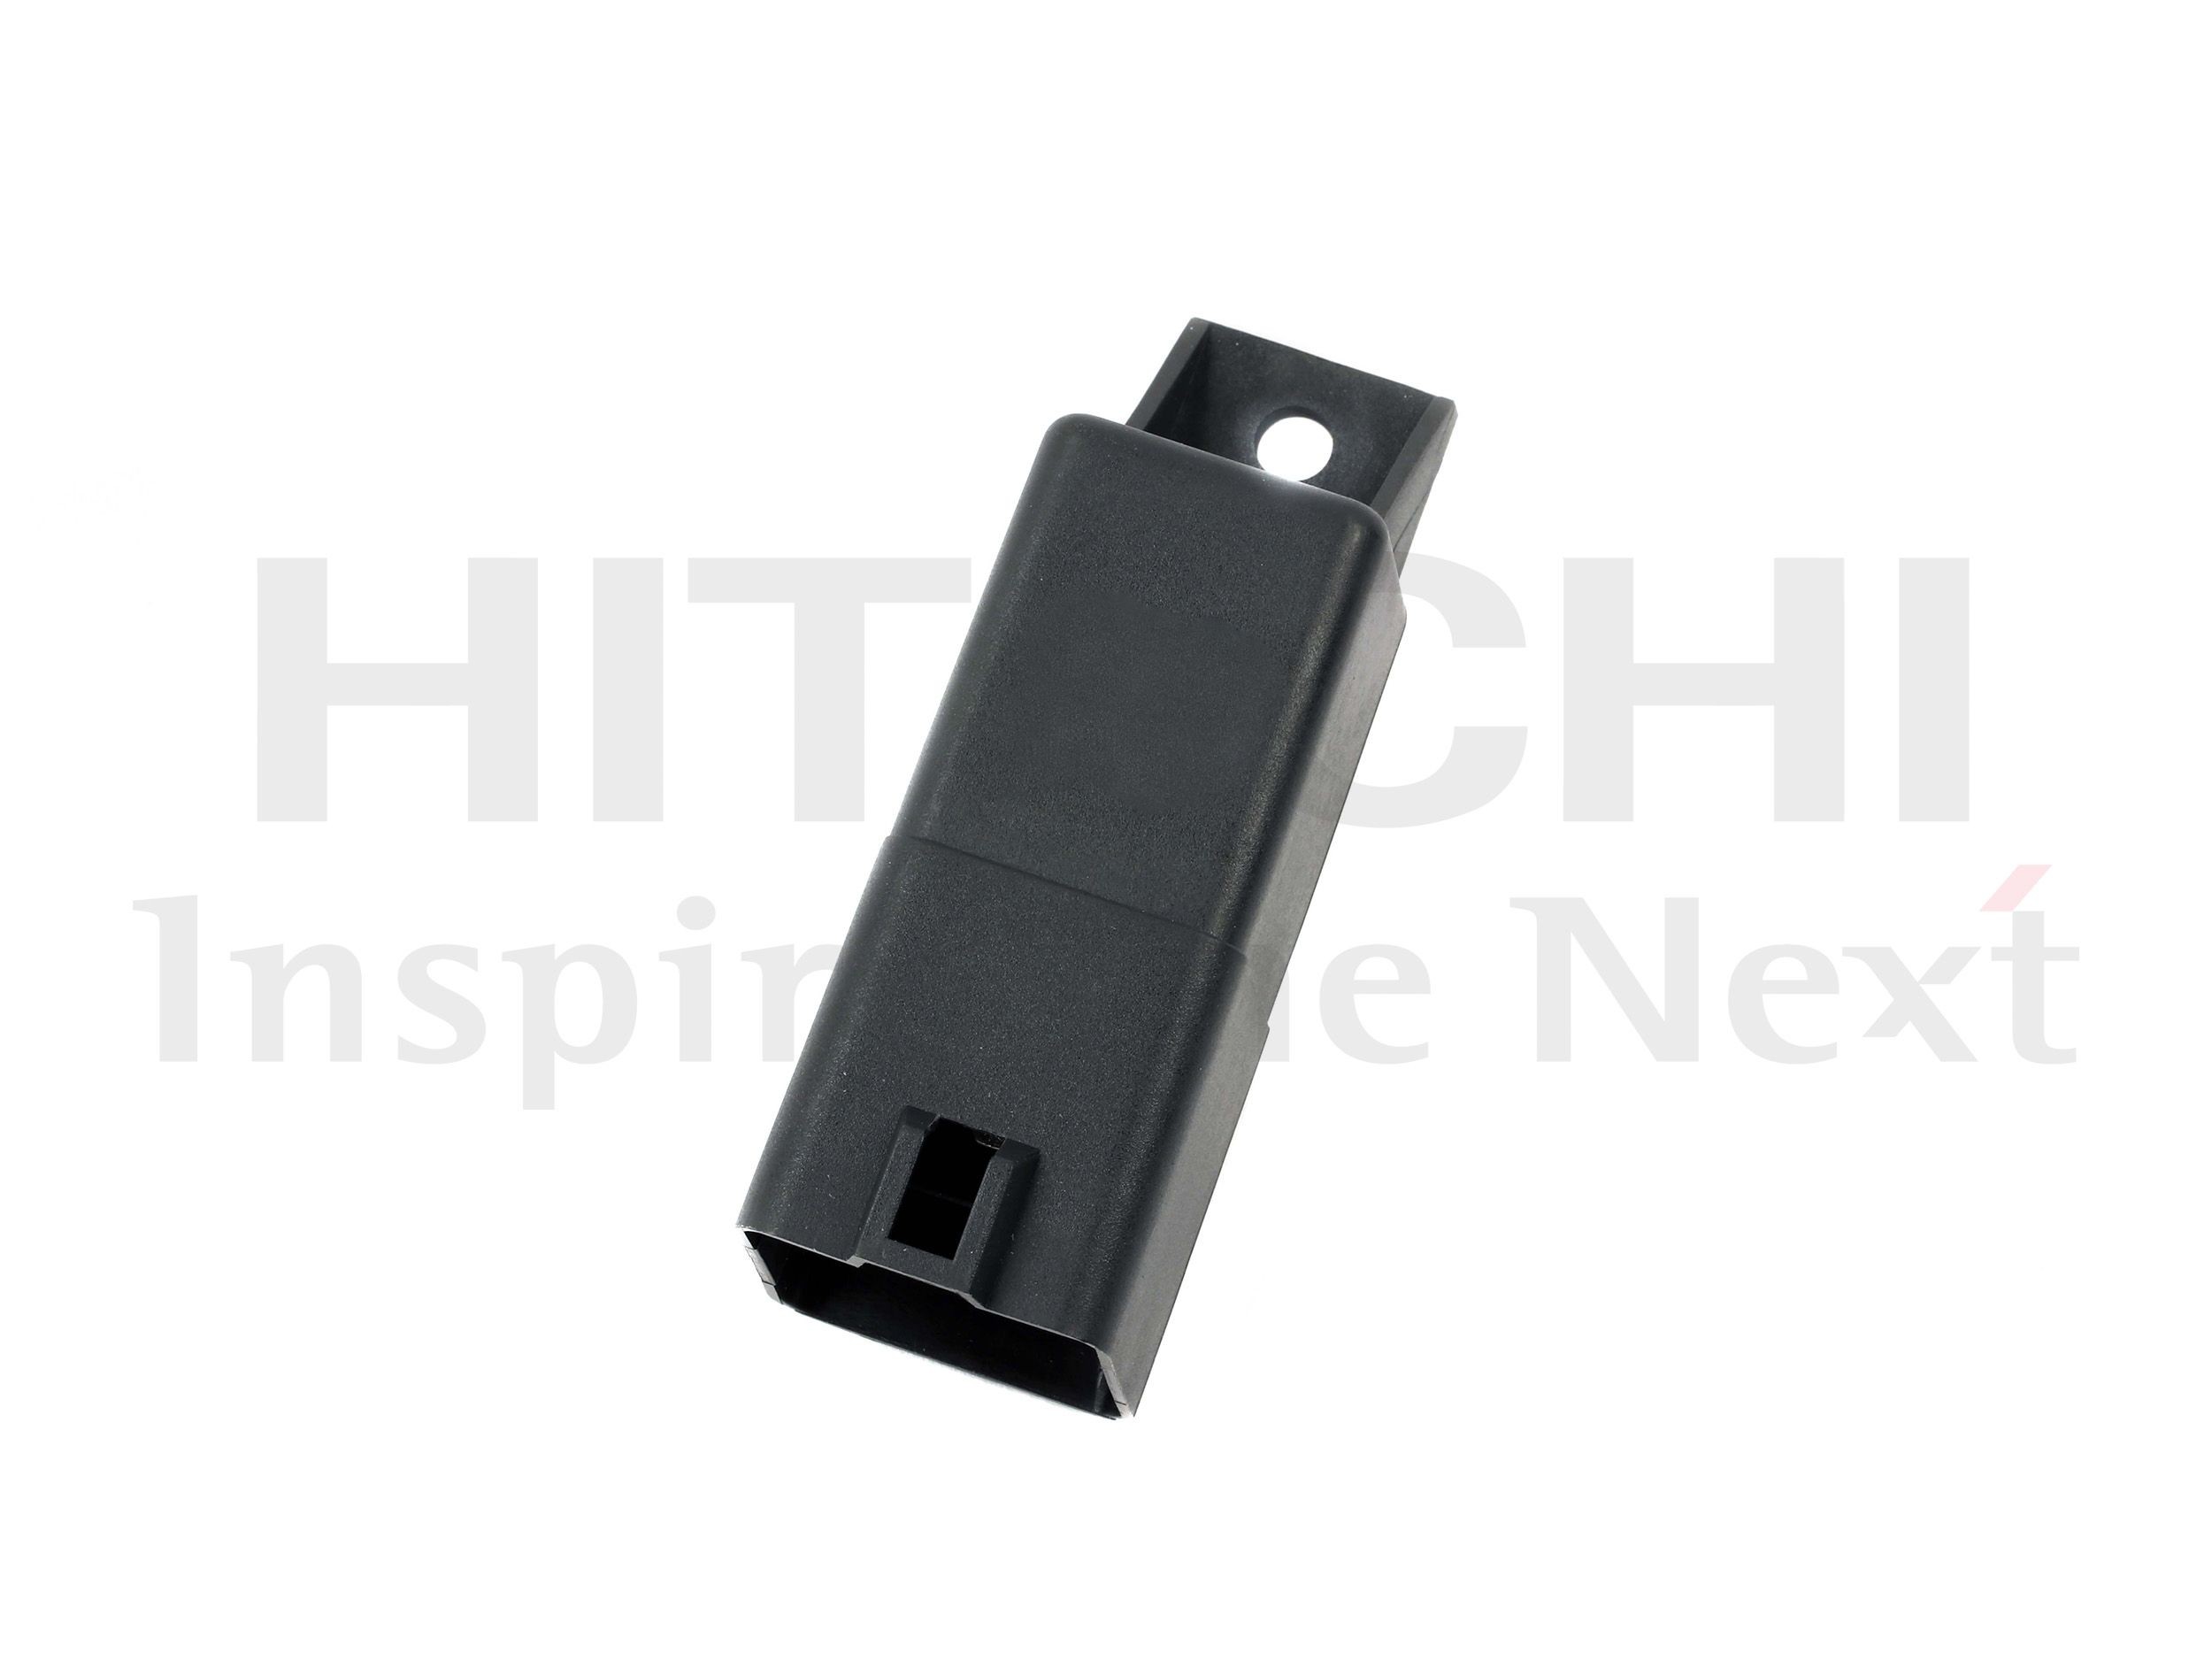 Honda Glow plug relay HITACHI 2502094 at a good price